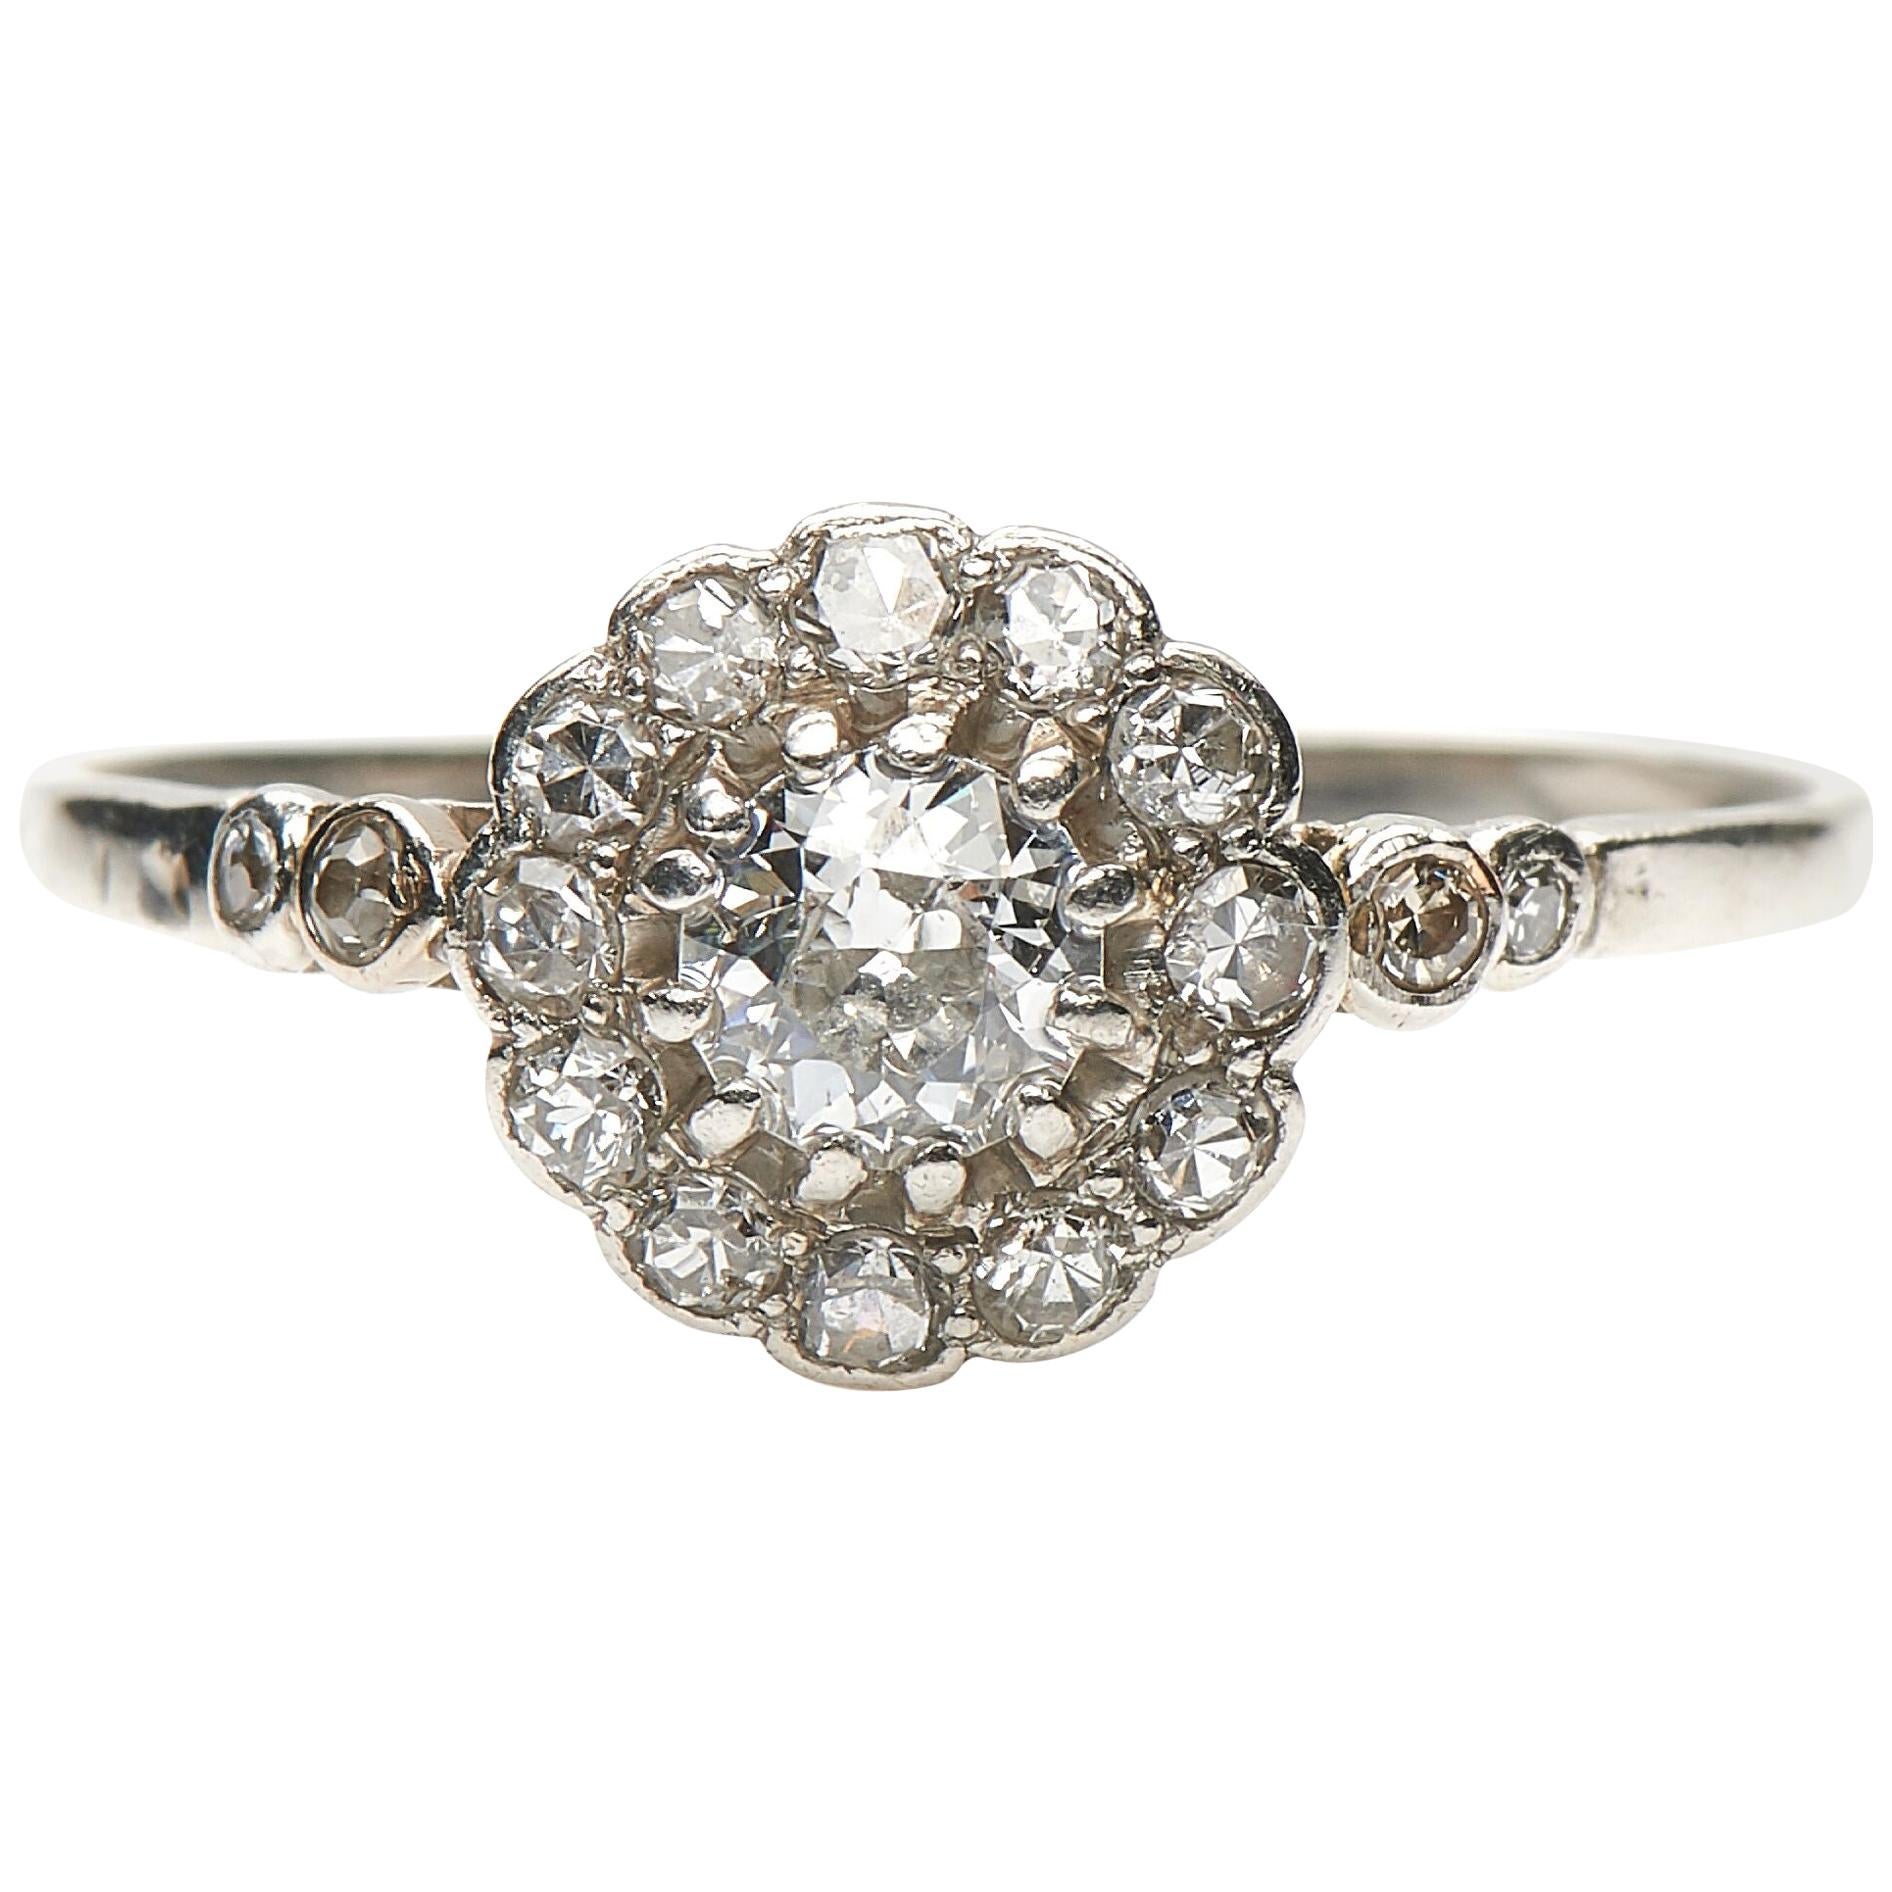 Antique, Edwardian, Platinum, Diamond Cluster Engagement Ring